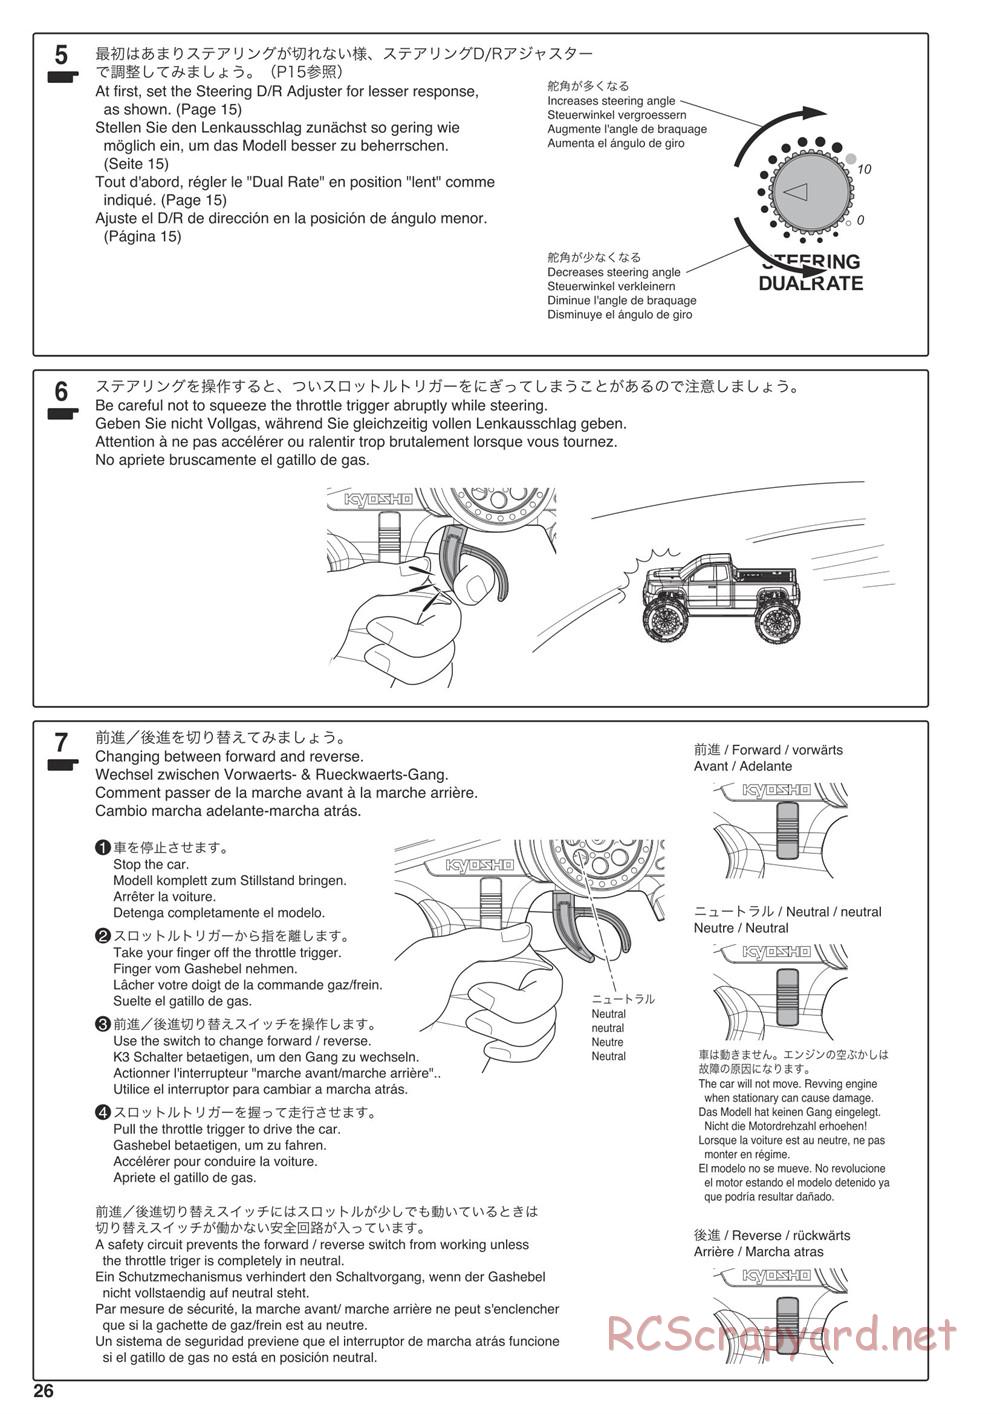 Kyosho - Nitro Tracker (2019) - Manual - Page 26